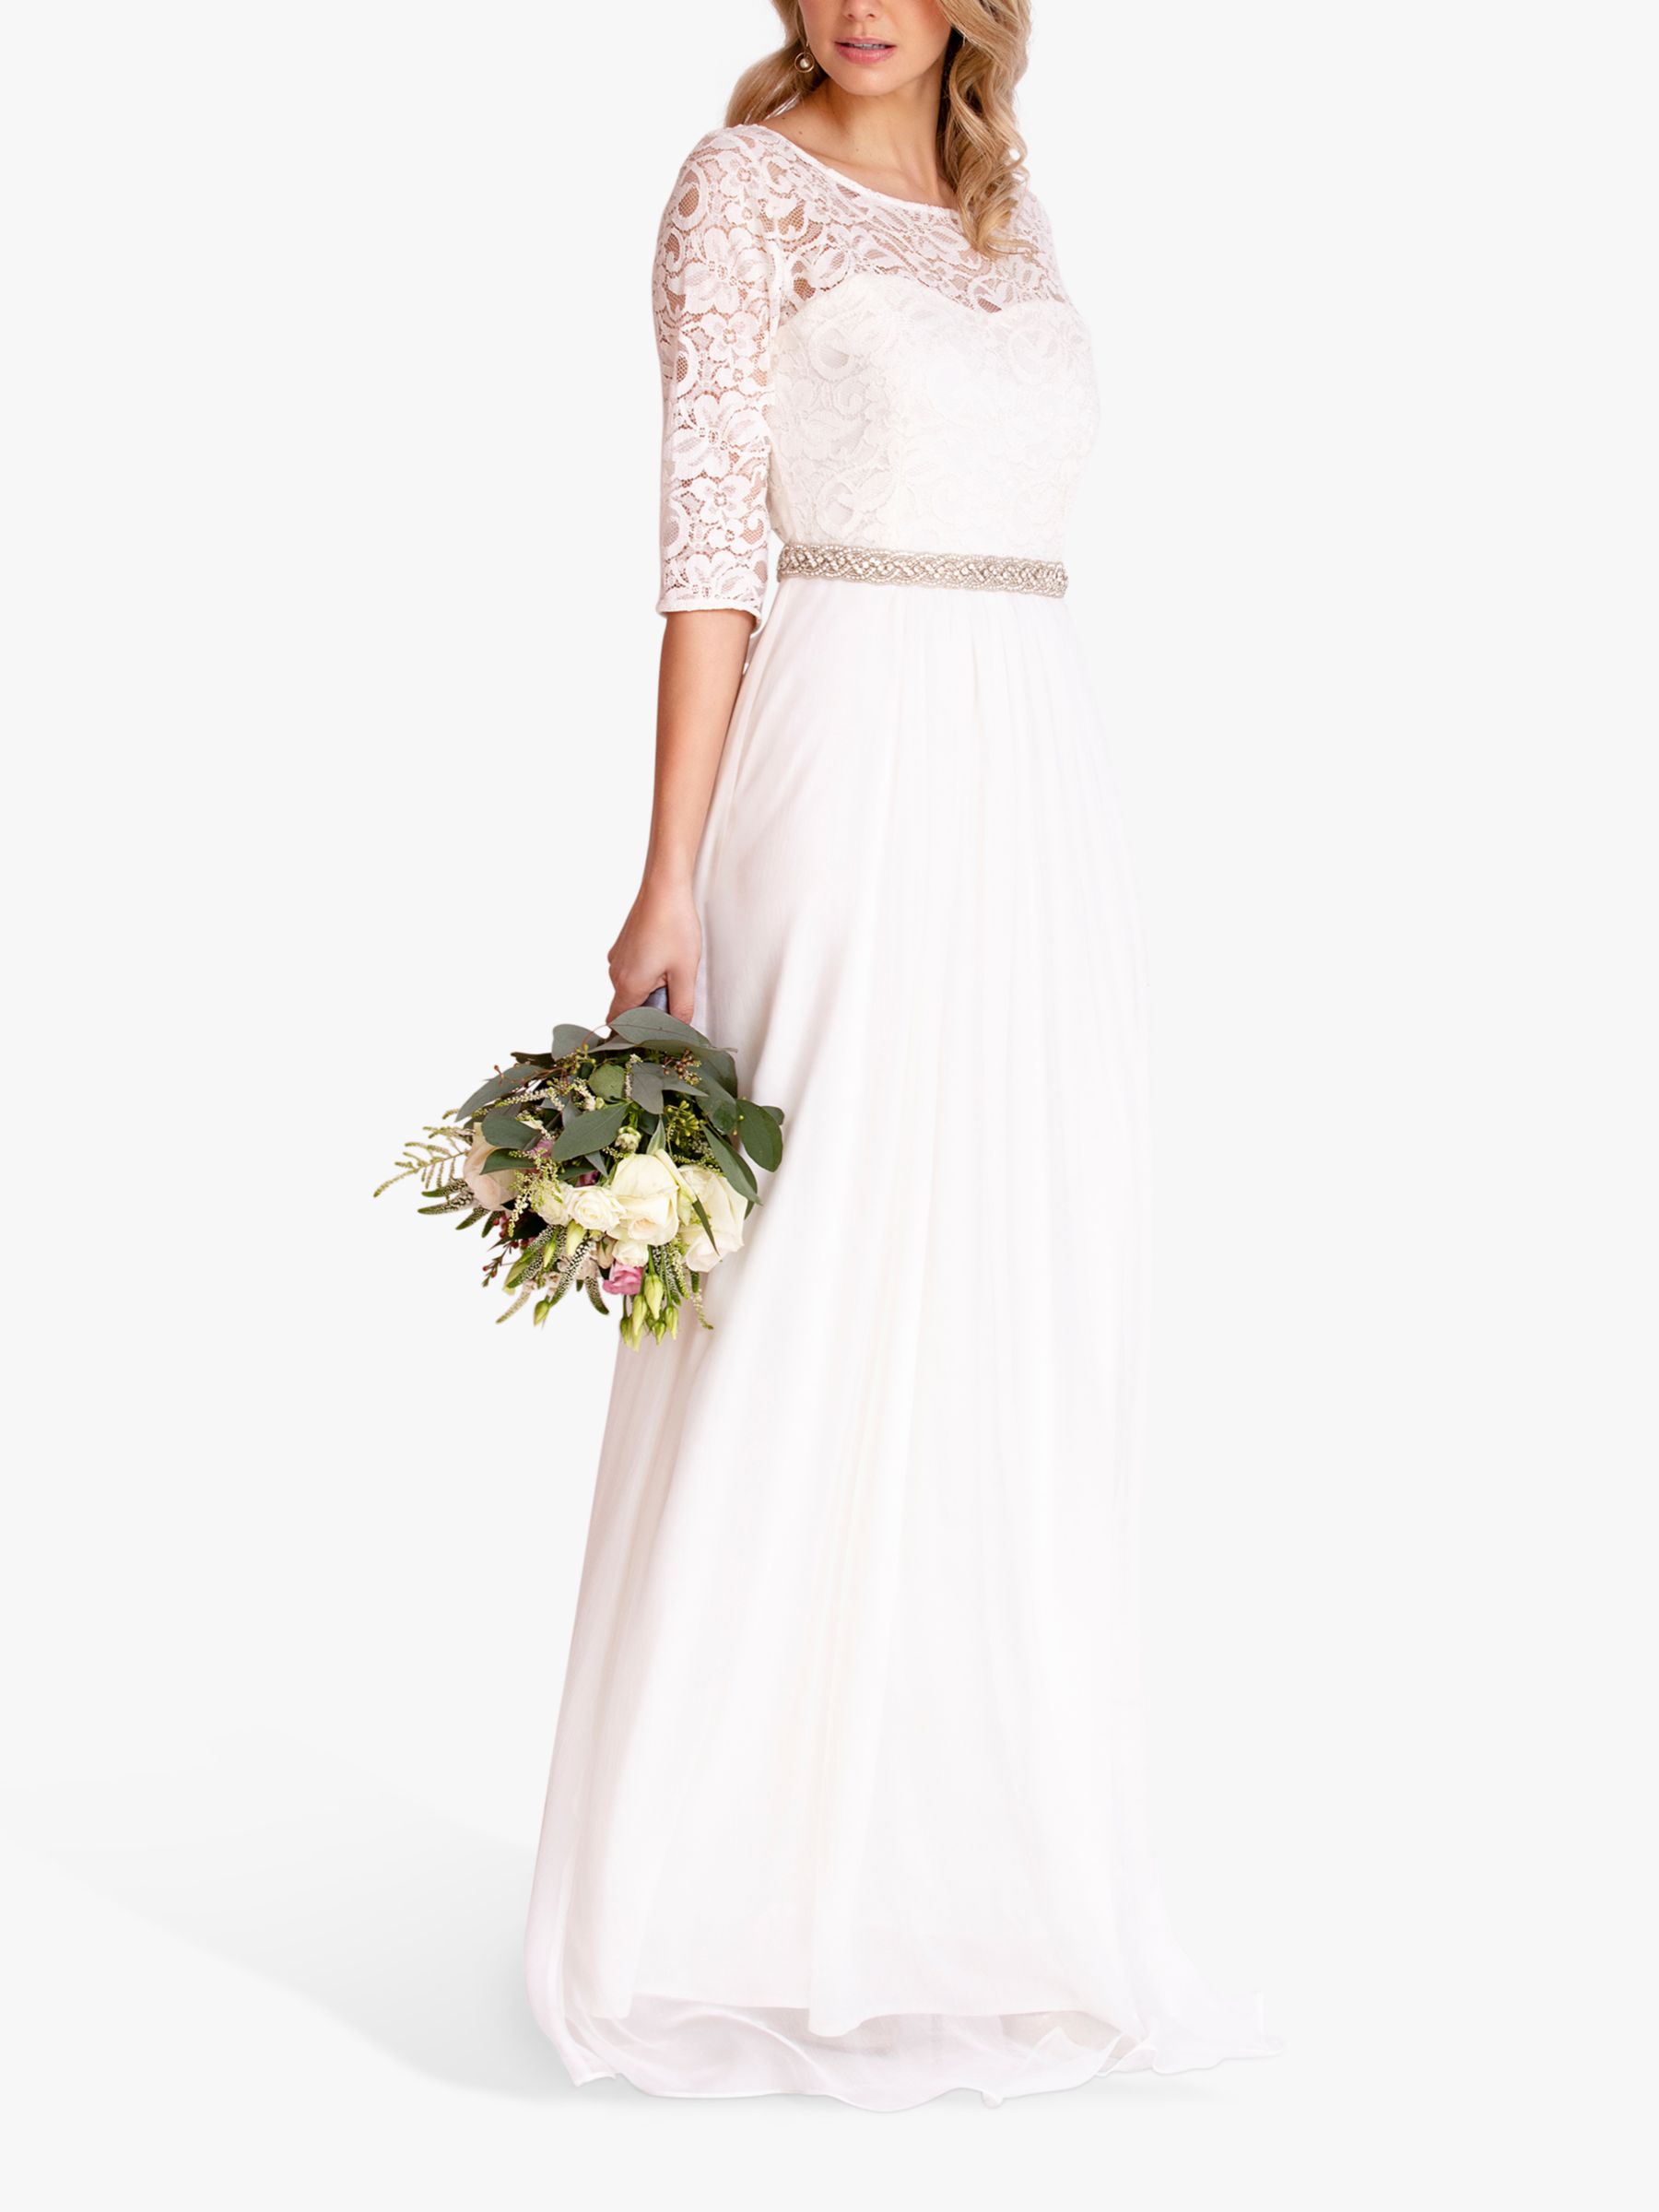 Alie Street Opal Silk Wedding Gown, Ivory, 14-16